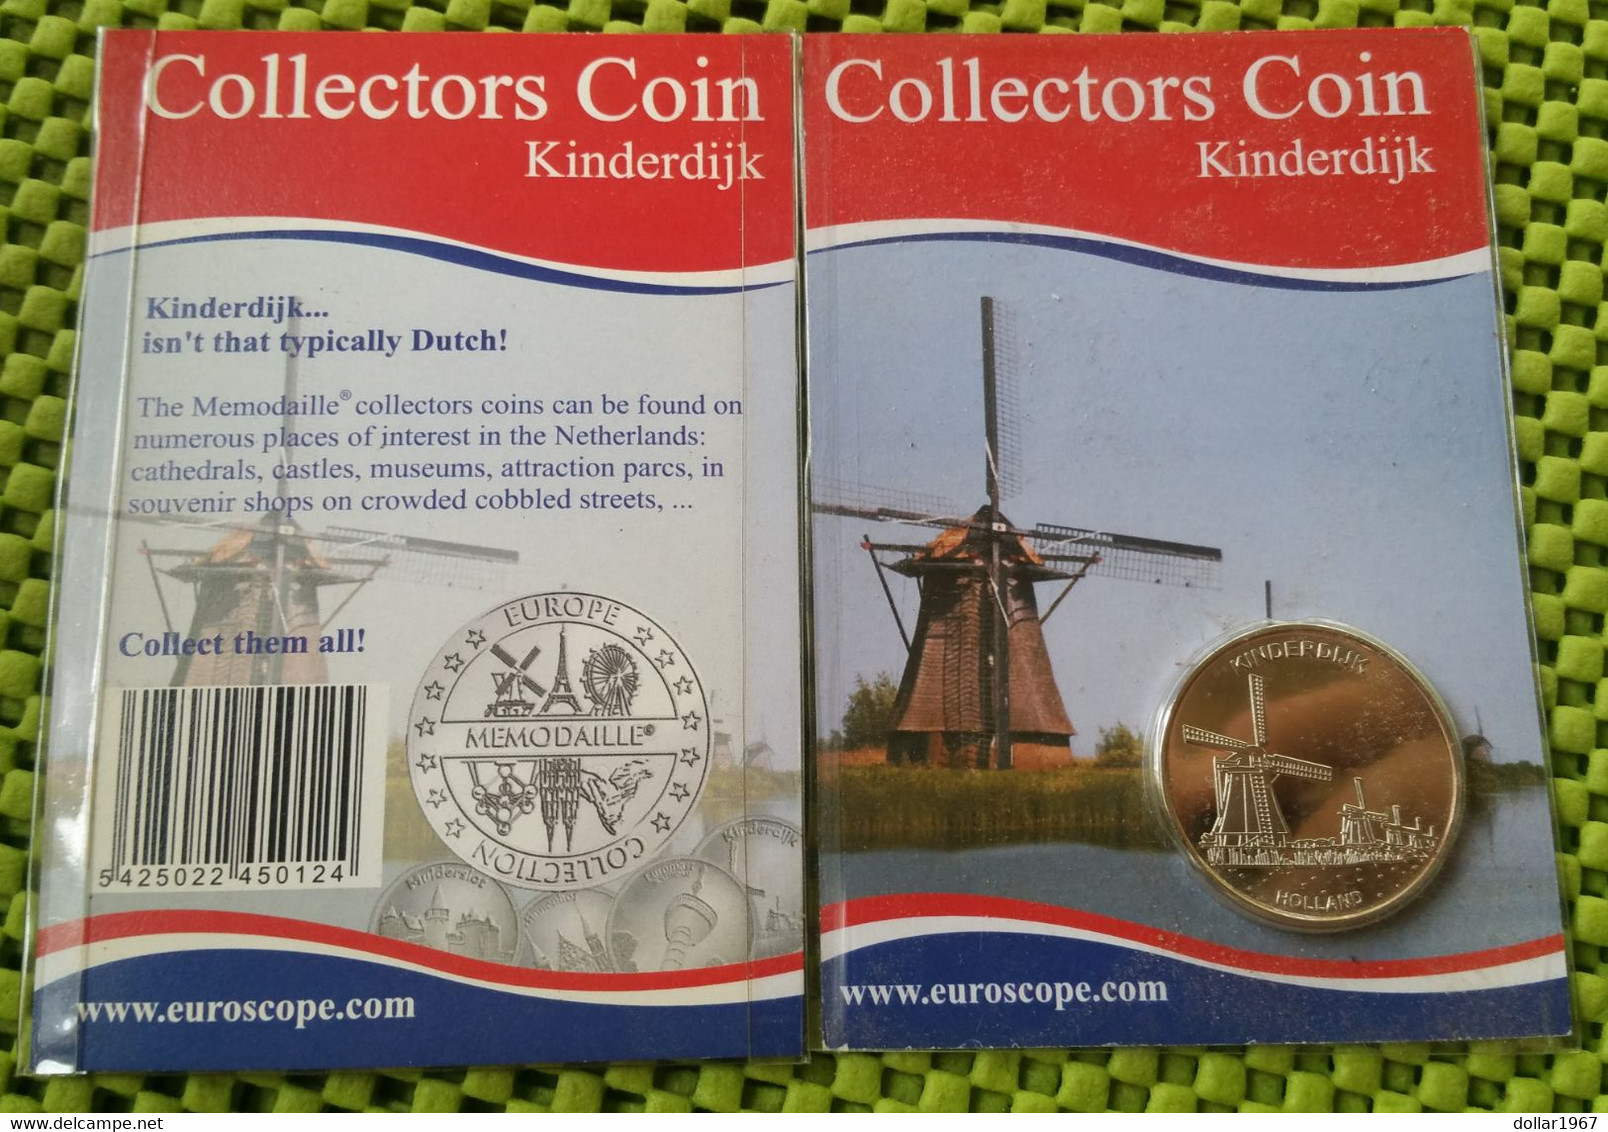 Collectors Coin  - Kinderdijk Alblasserwaard - Molenlanden / Millland / - Pays-Bas - Pays-Bas - Souvenir-Medaille (elongated Coins)